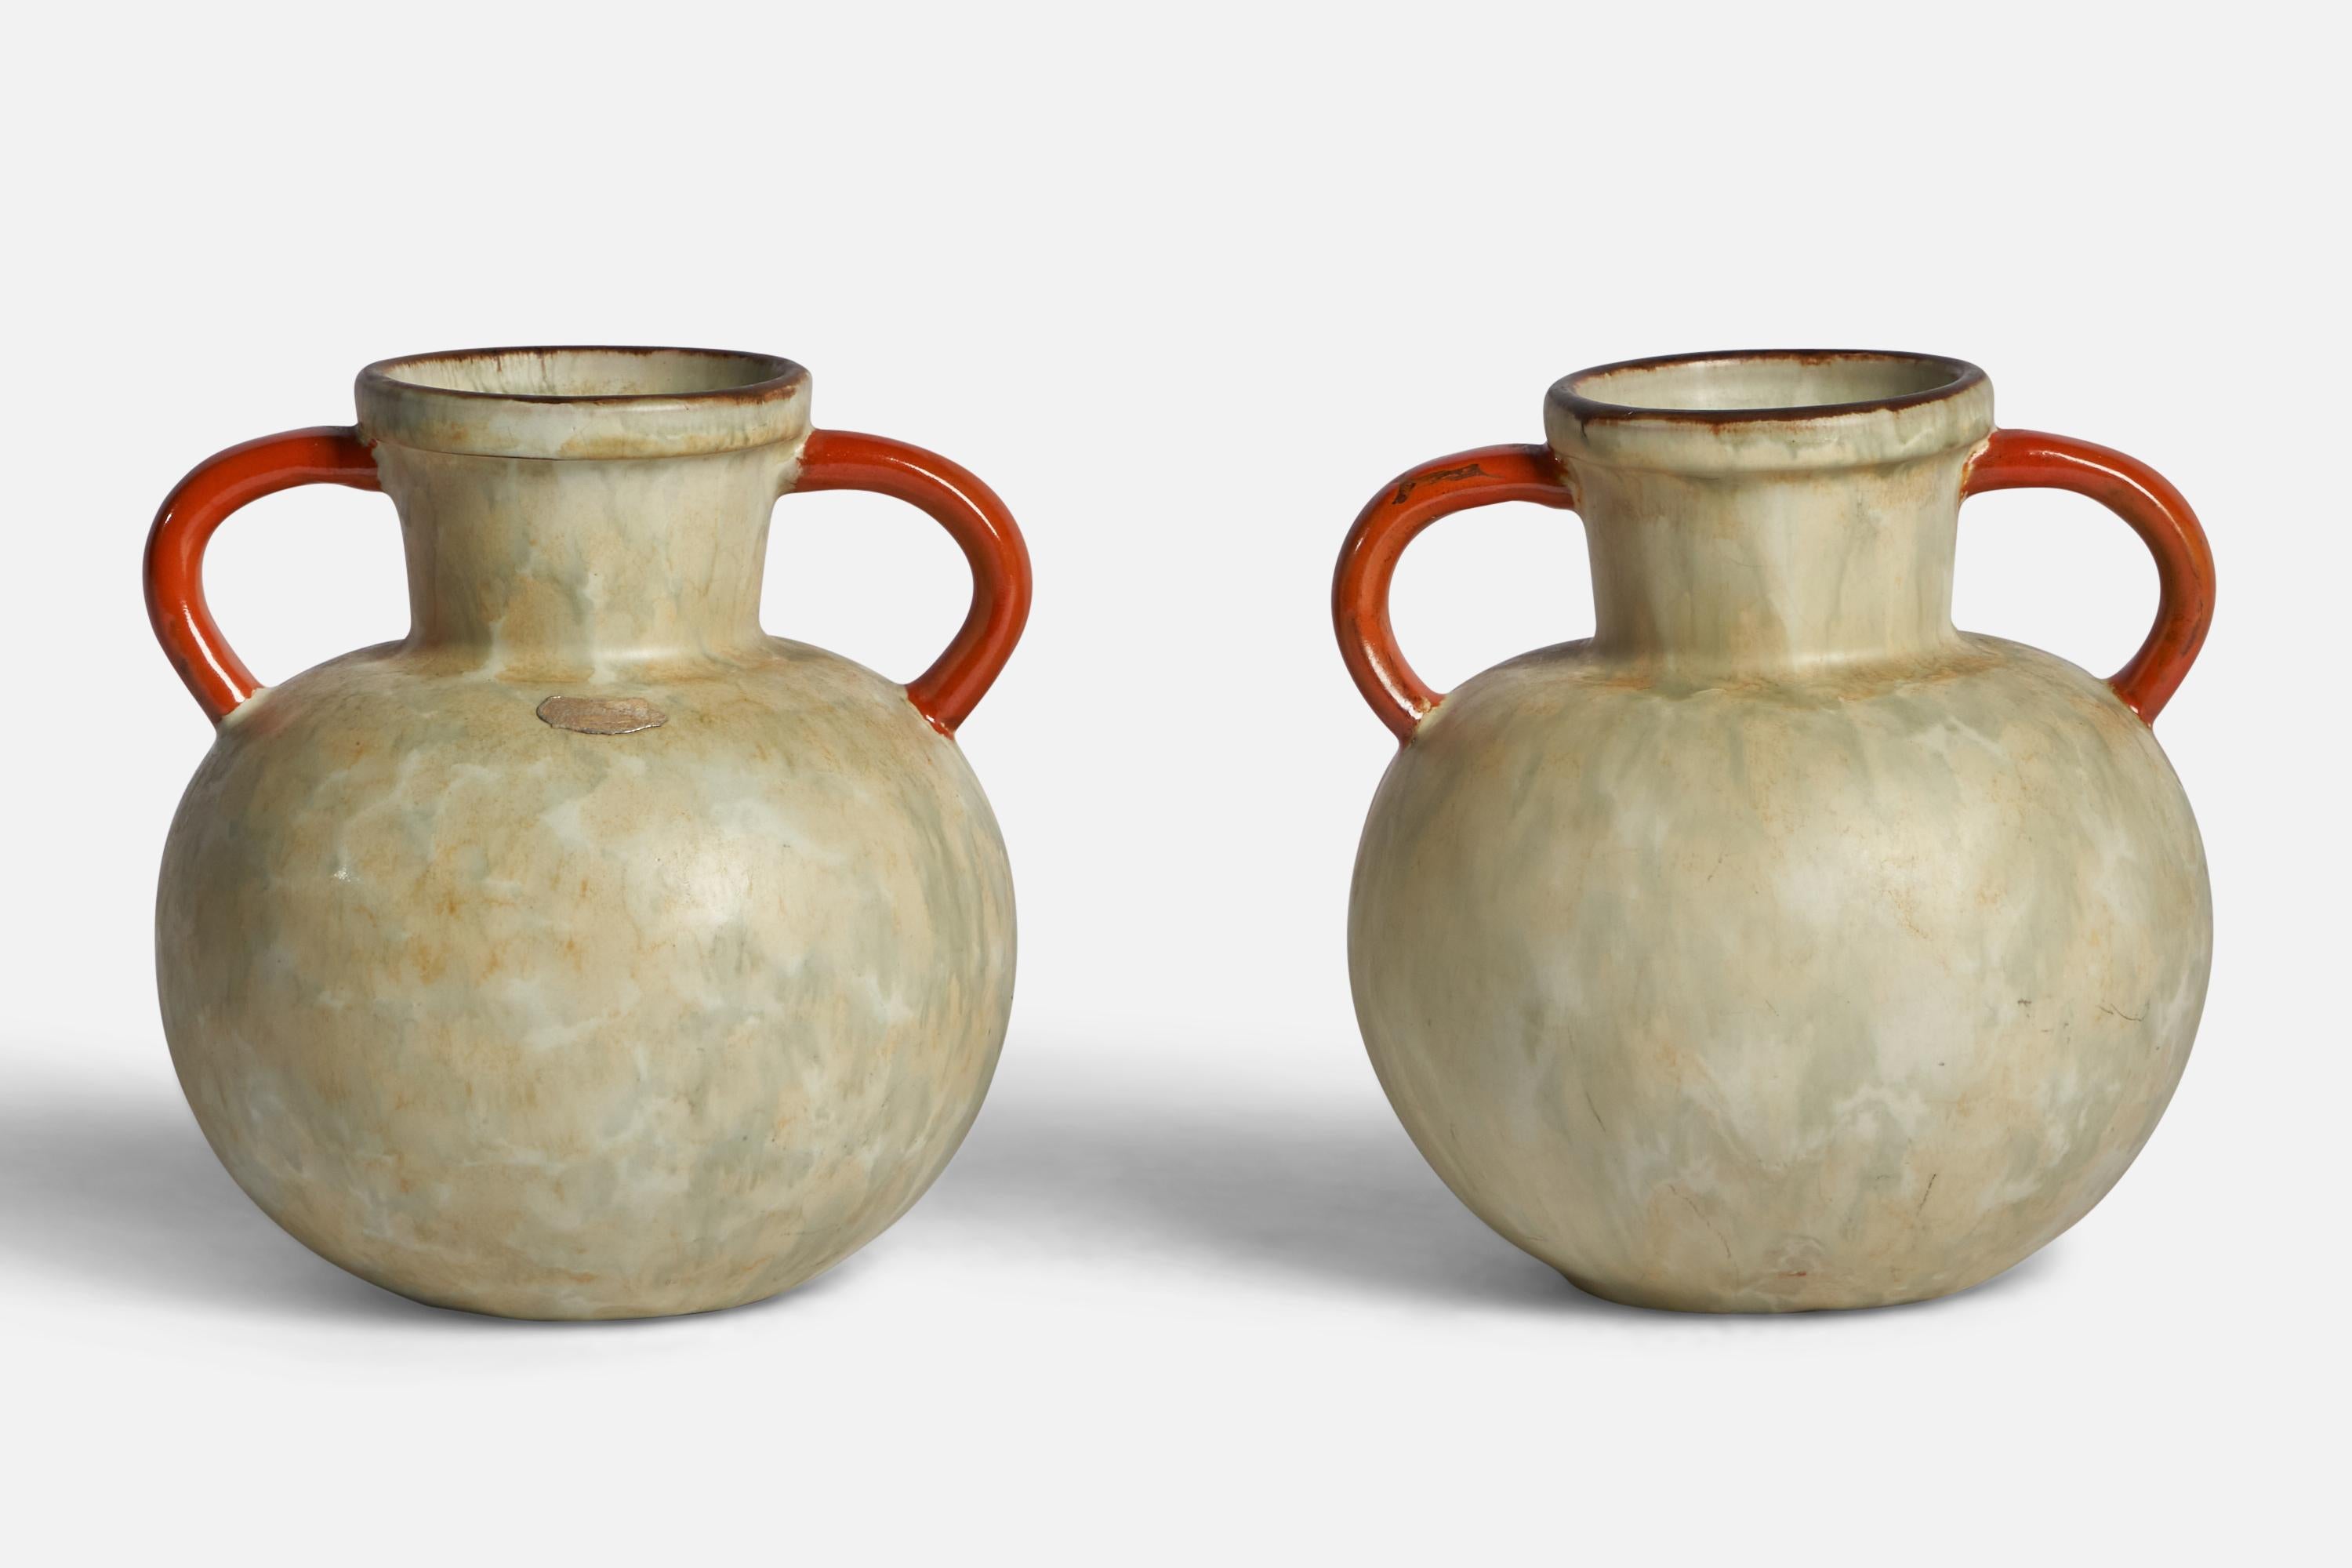 A pair of beige and orange-glazed earthenware vases designed and produced by Upsala Ekeby, Sweden, 1930s.

“EKEBY 97” stamp on bottom